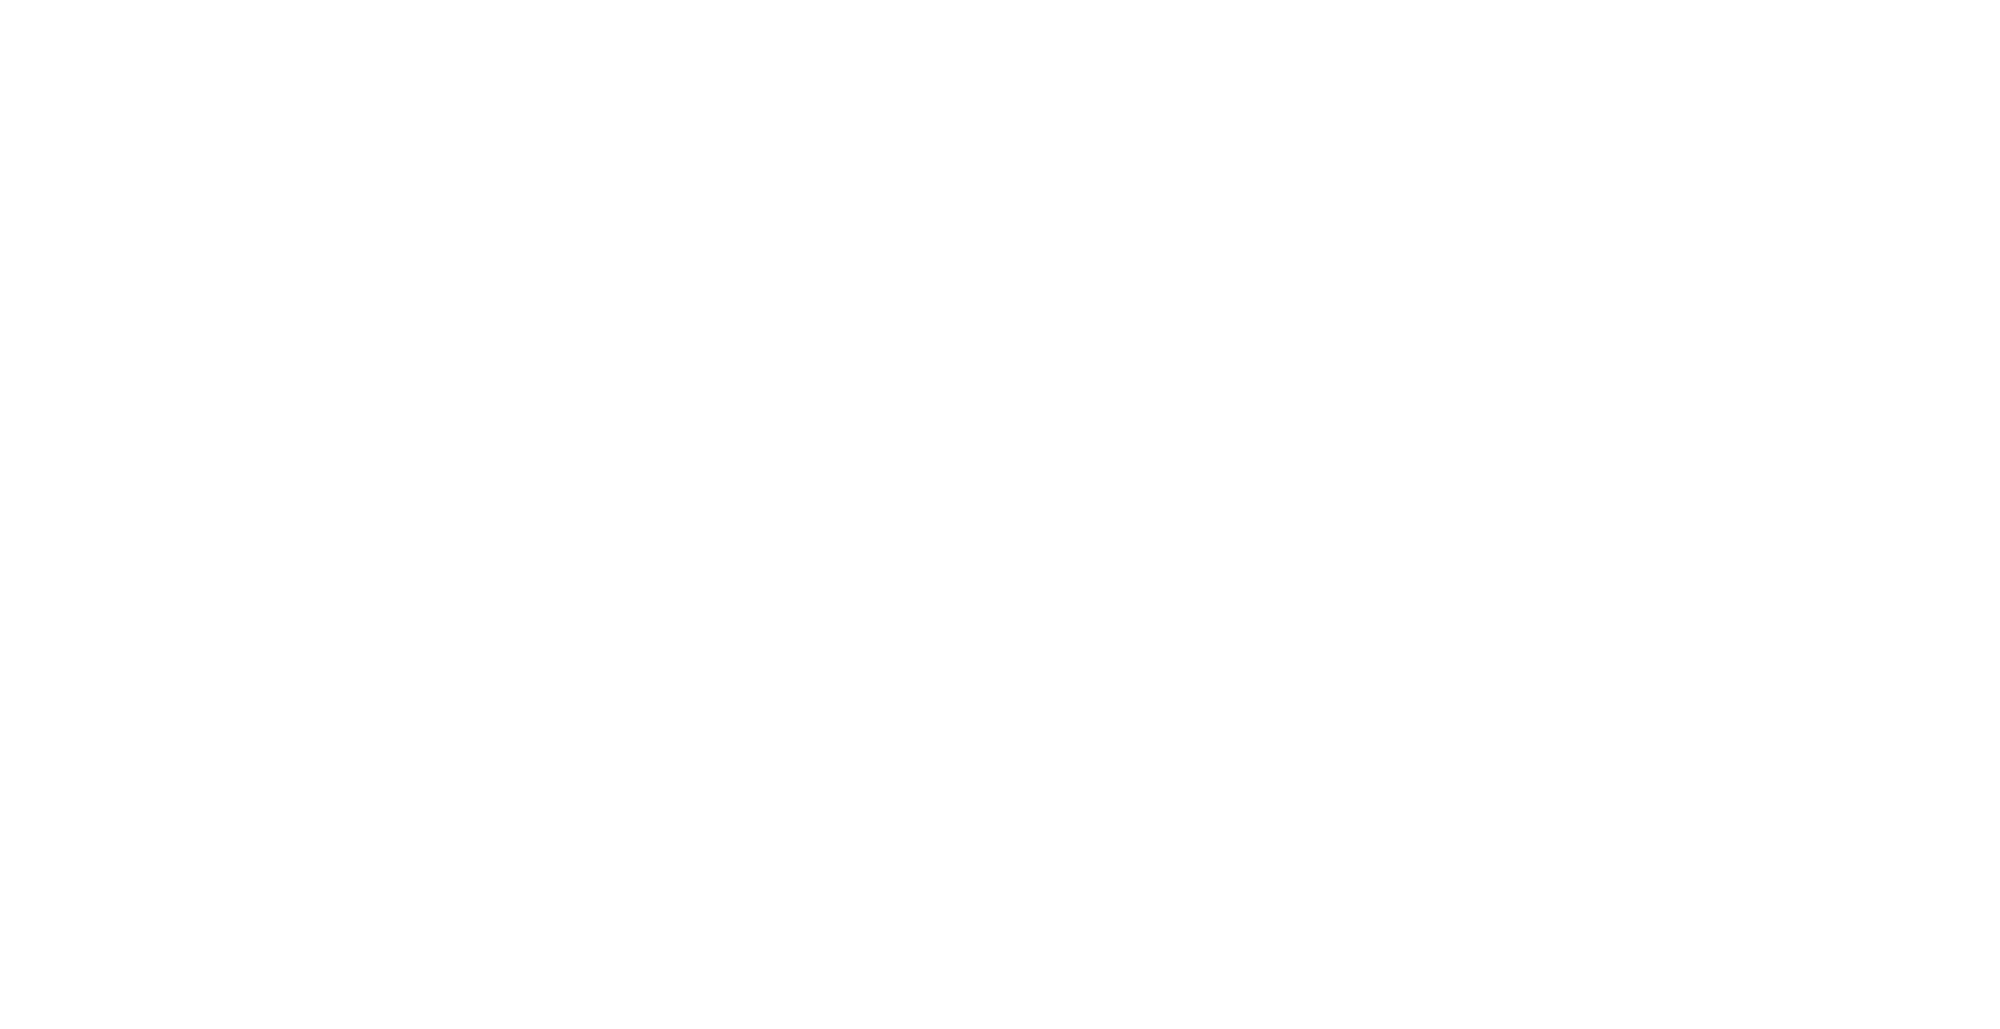 Bic Intensity